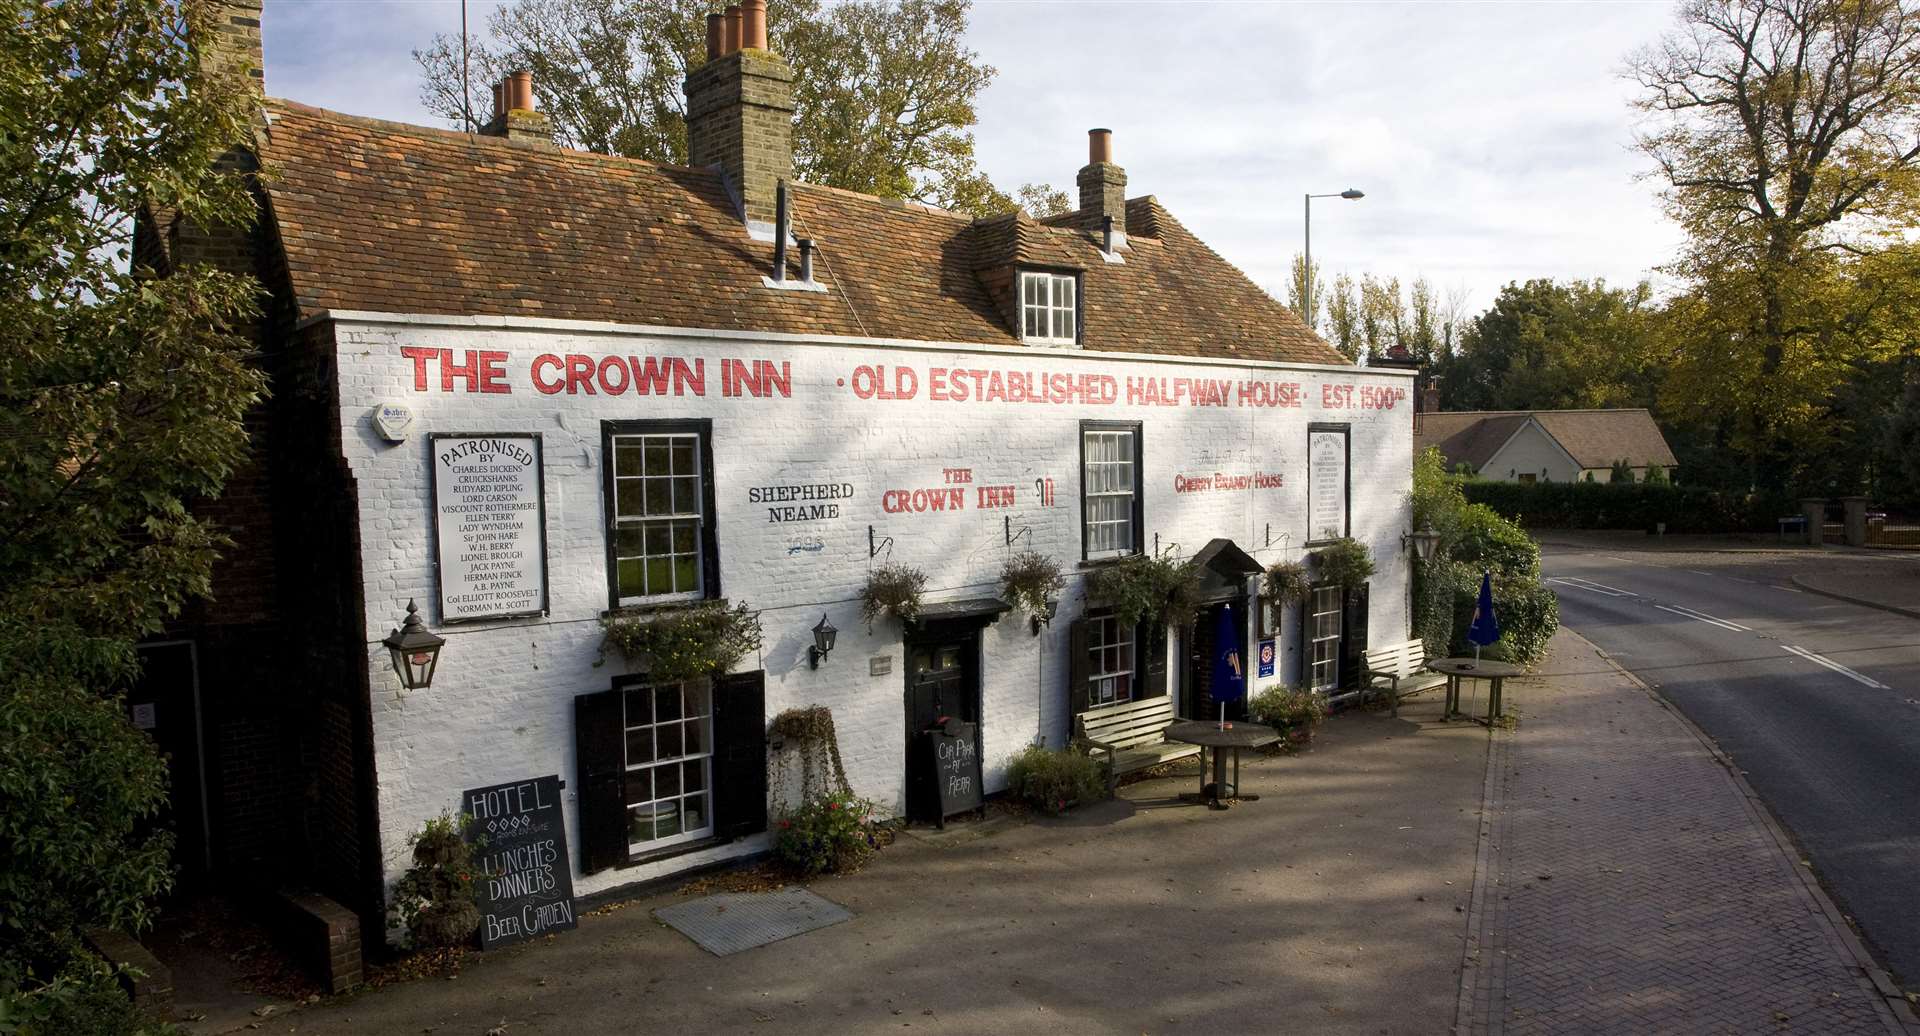 The Crown Inn at Sarre sits halfway between Canterbury and Margate